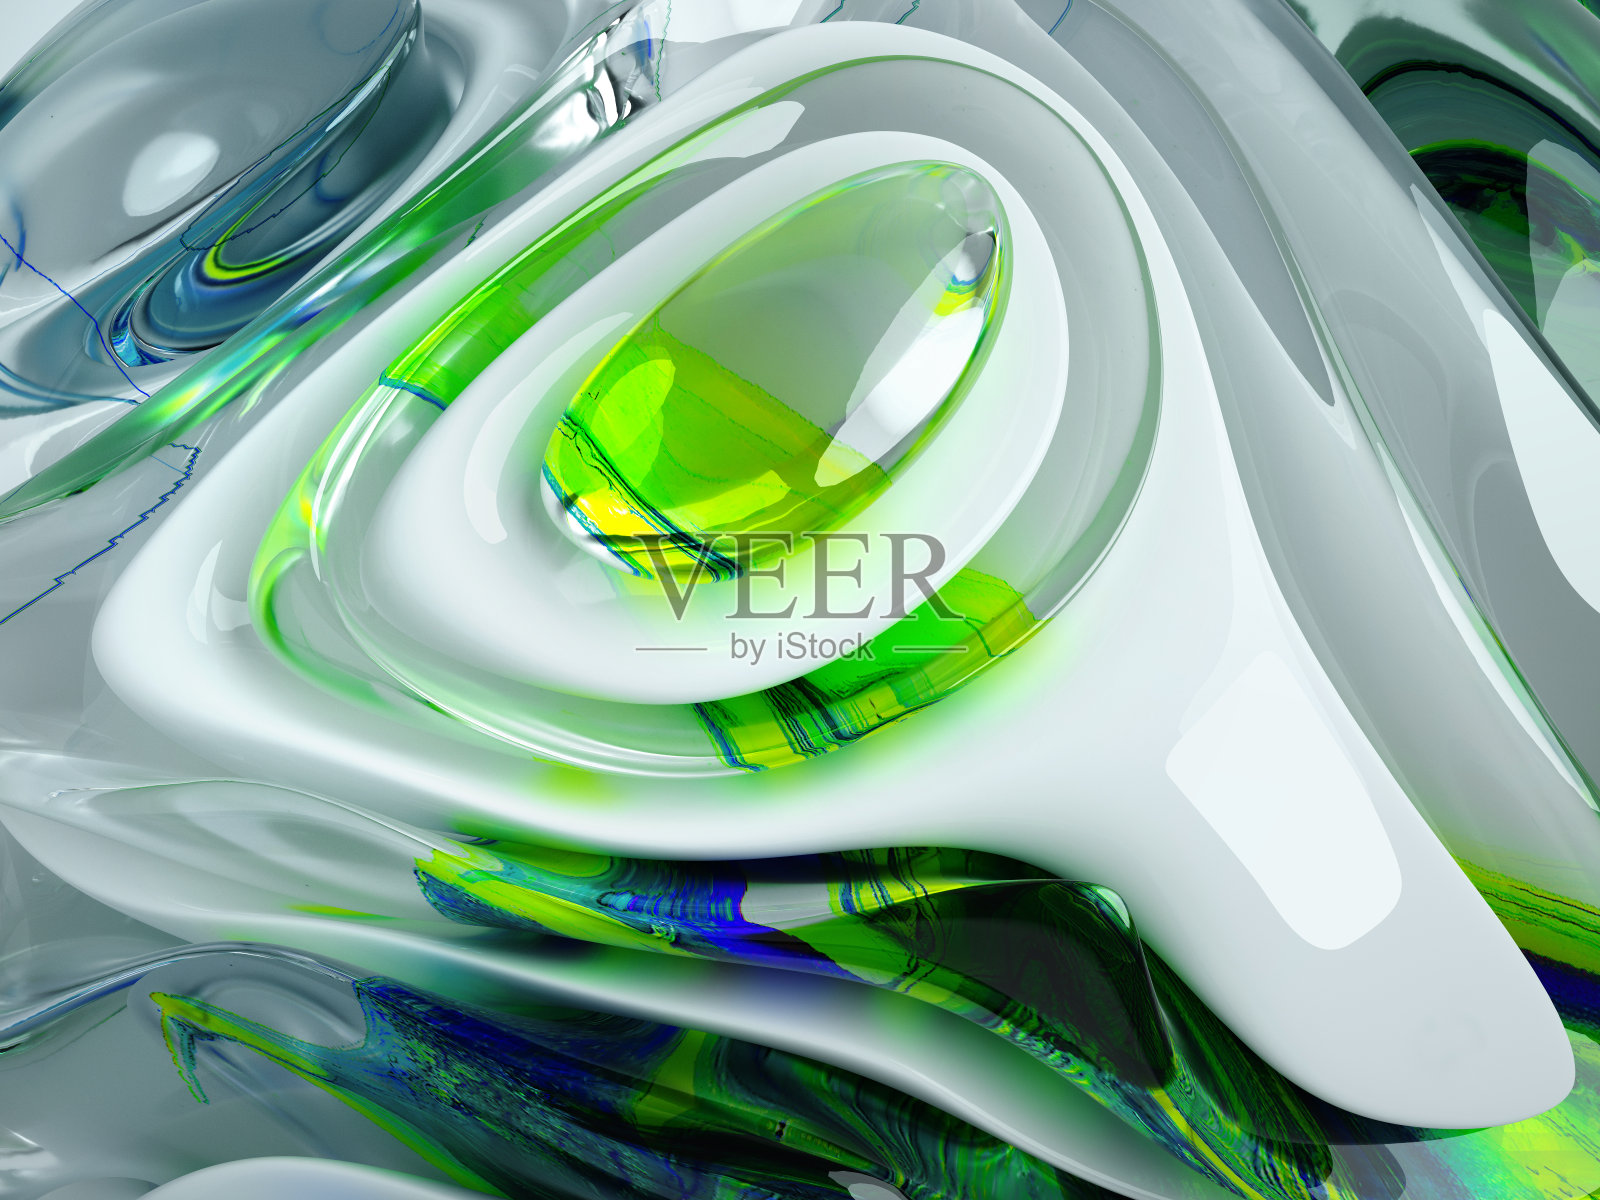 3d渲染的抽象艺术3d背景与有机曲线圆形波浪光滑和柔软的生物形式的白色光泽陶瓷材料与玻璃玻璃部分的图案在绿色和蓝色照片摄影图片